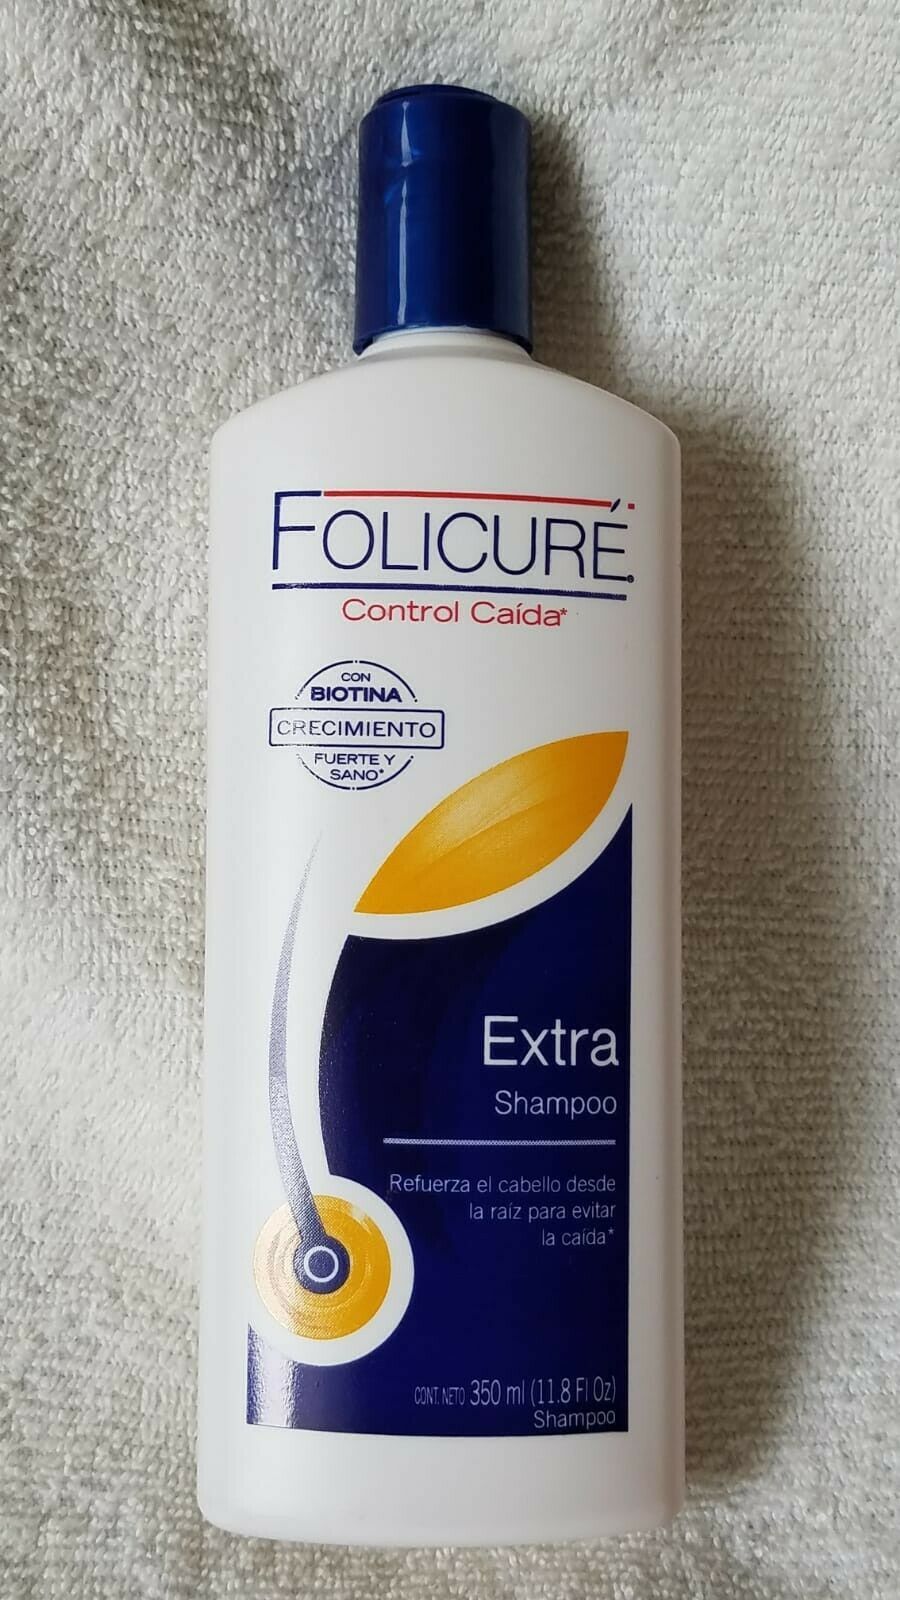 1X - FOLICURE " EXTRA " Shampoo for Fuller Thicker Hair, 11.8 fl oz. - $14.99